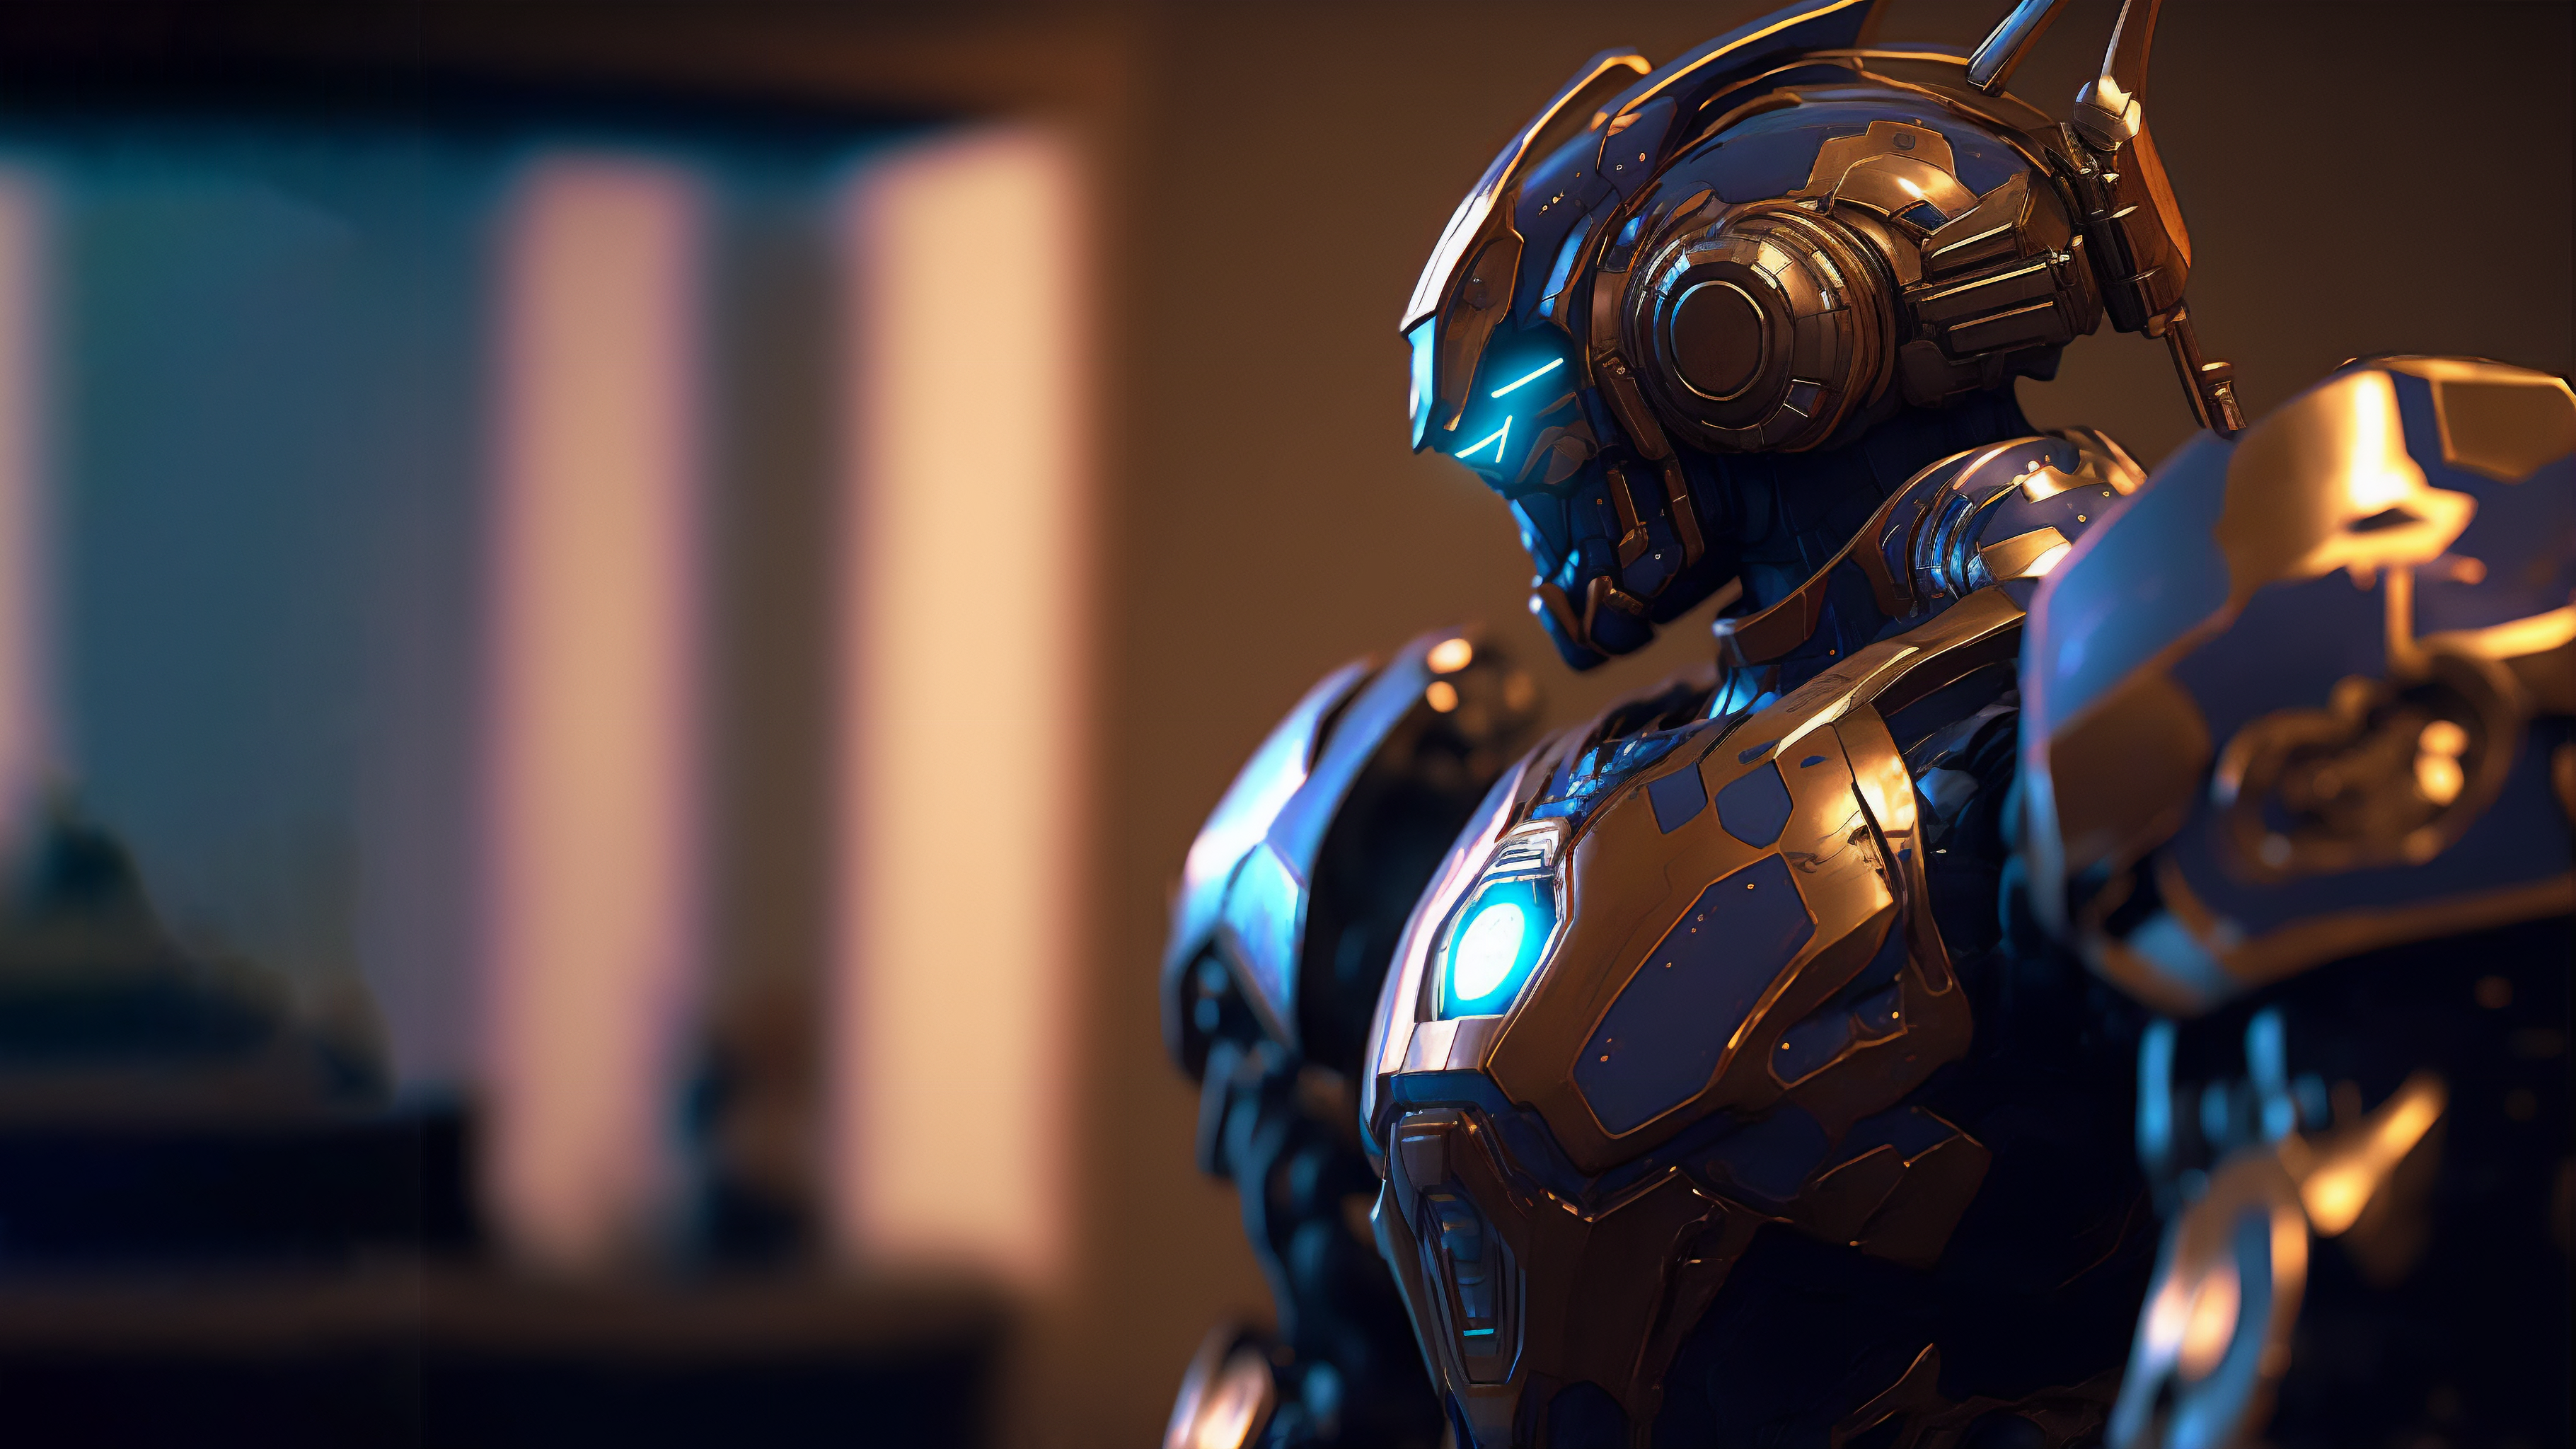 General 3641x2048 robot Robotech armor science fiction futuristic AI art